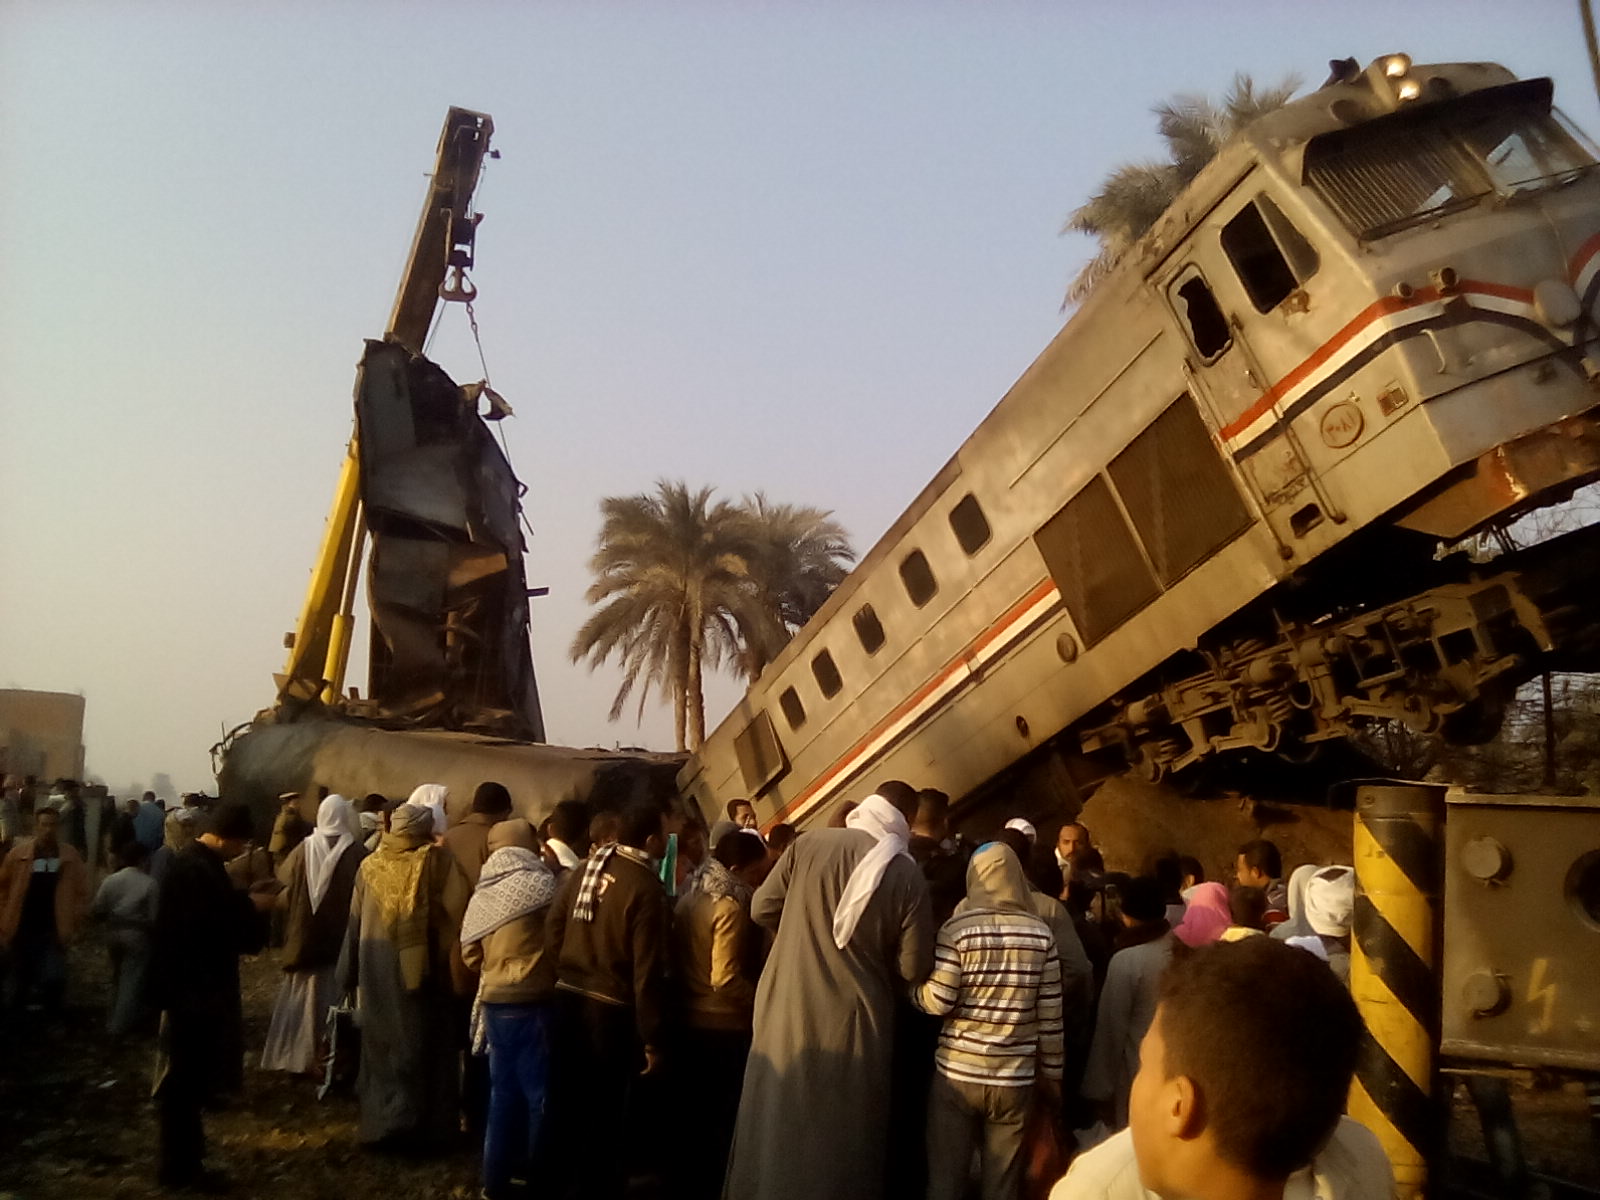 Train crash in Egypt's Beni Suef province injures 69 people